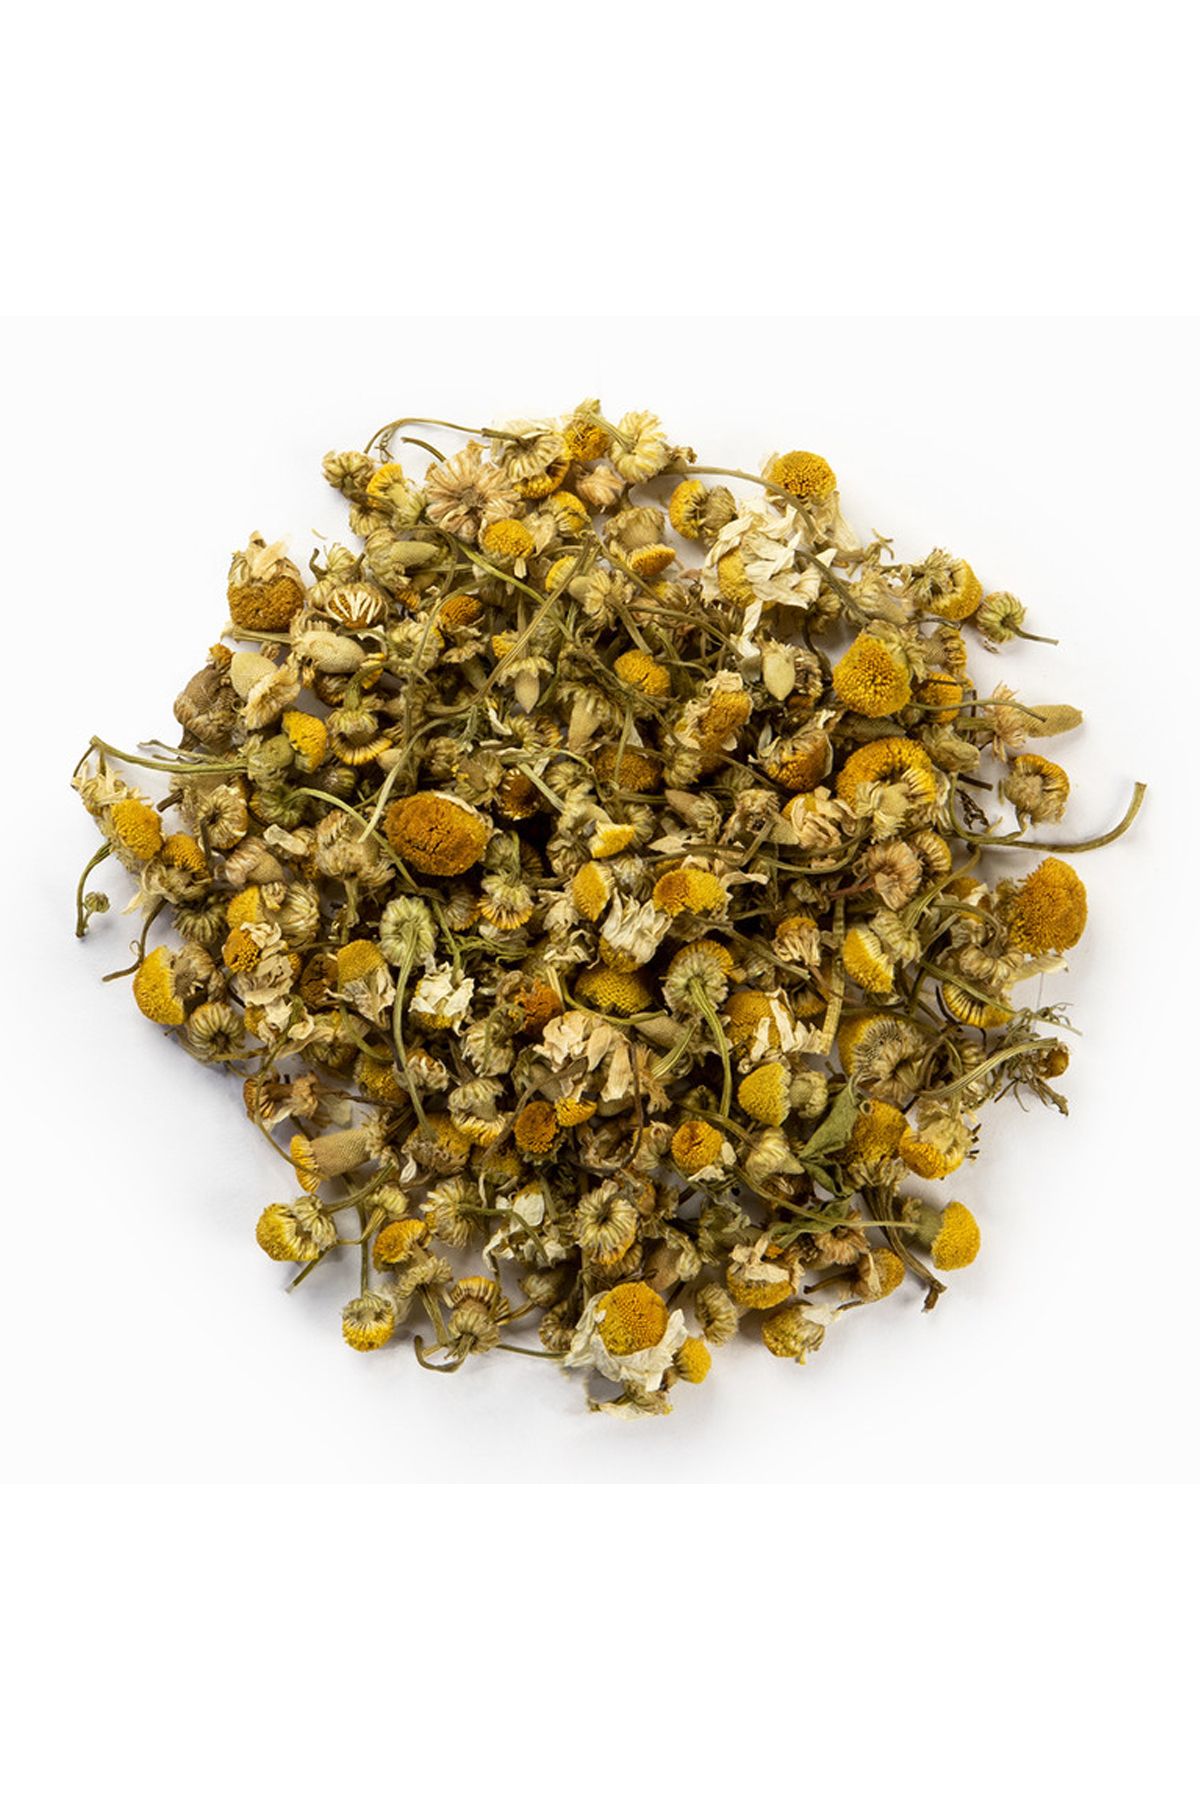 SELNUS Papatya 50 gram ( Papatya Çayı, Daisy, Asteraceae, Chamomillae Romanae, ) Doğal Kurutulmuş